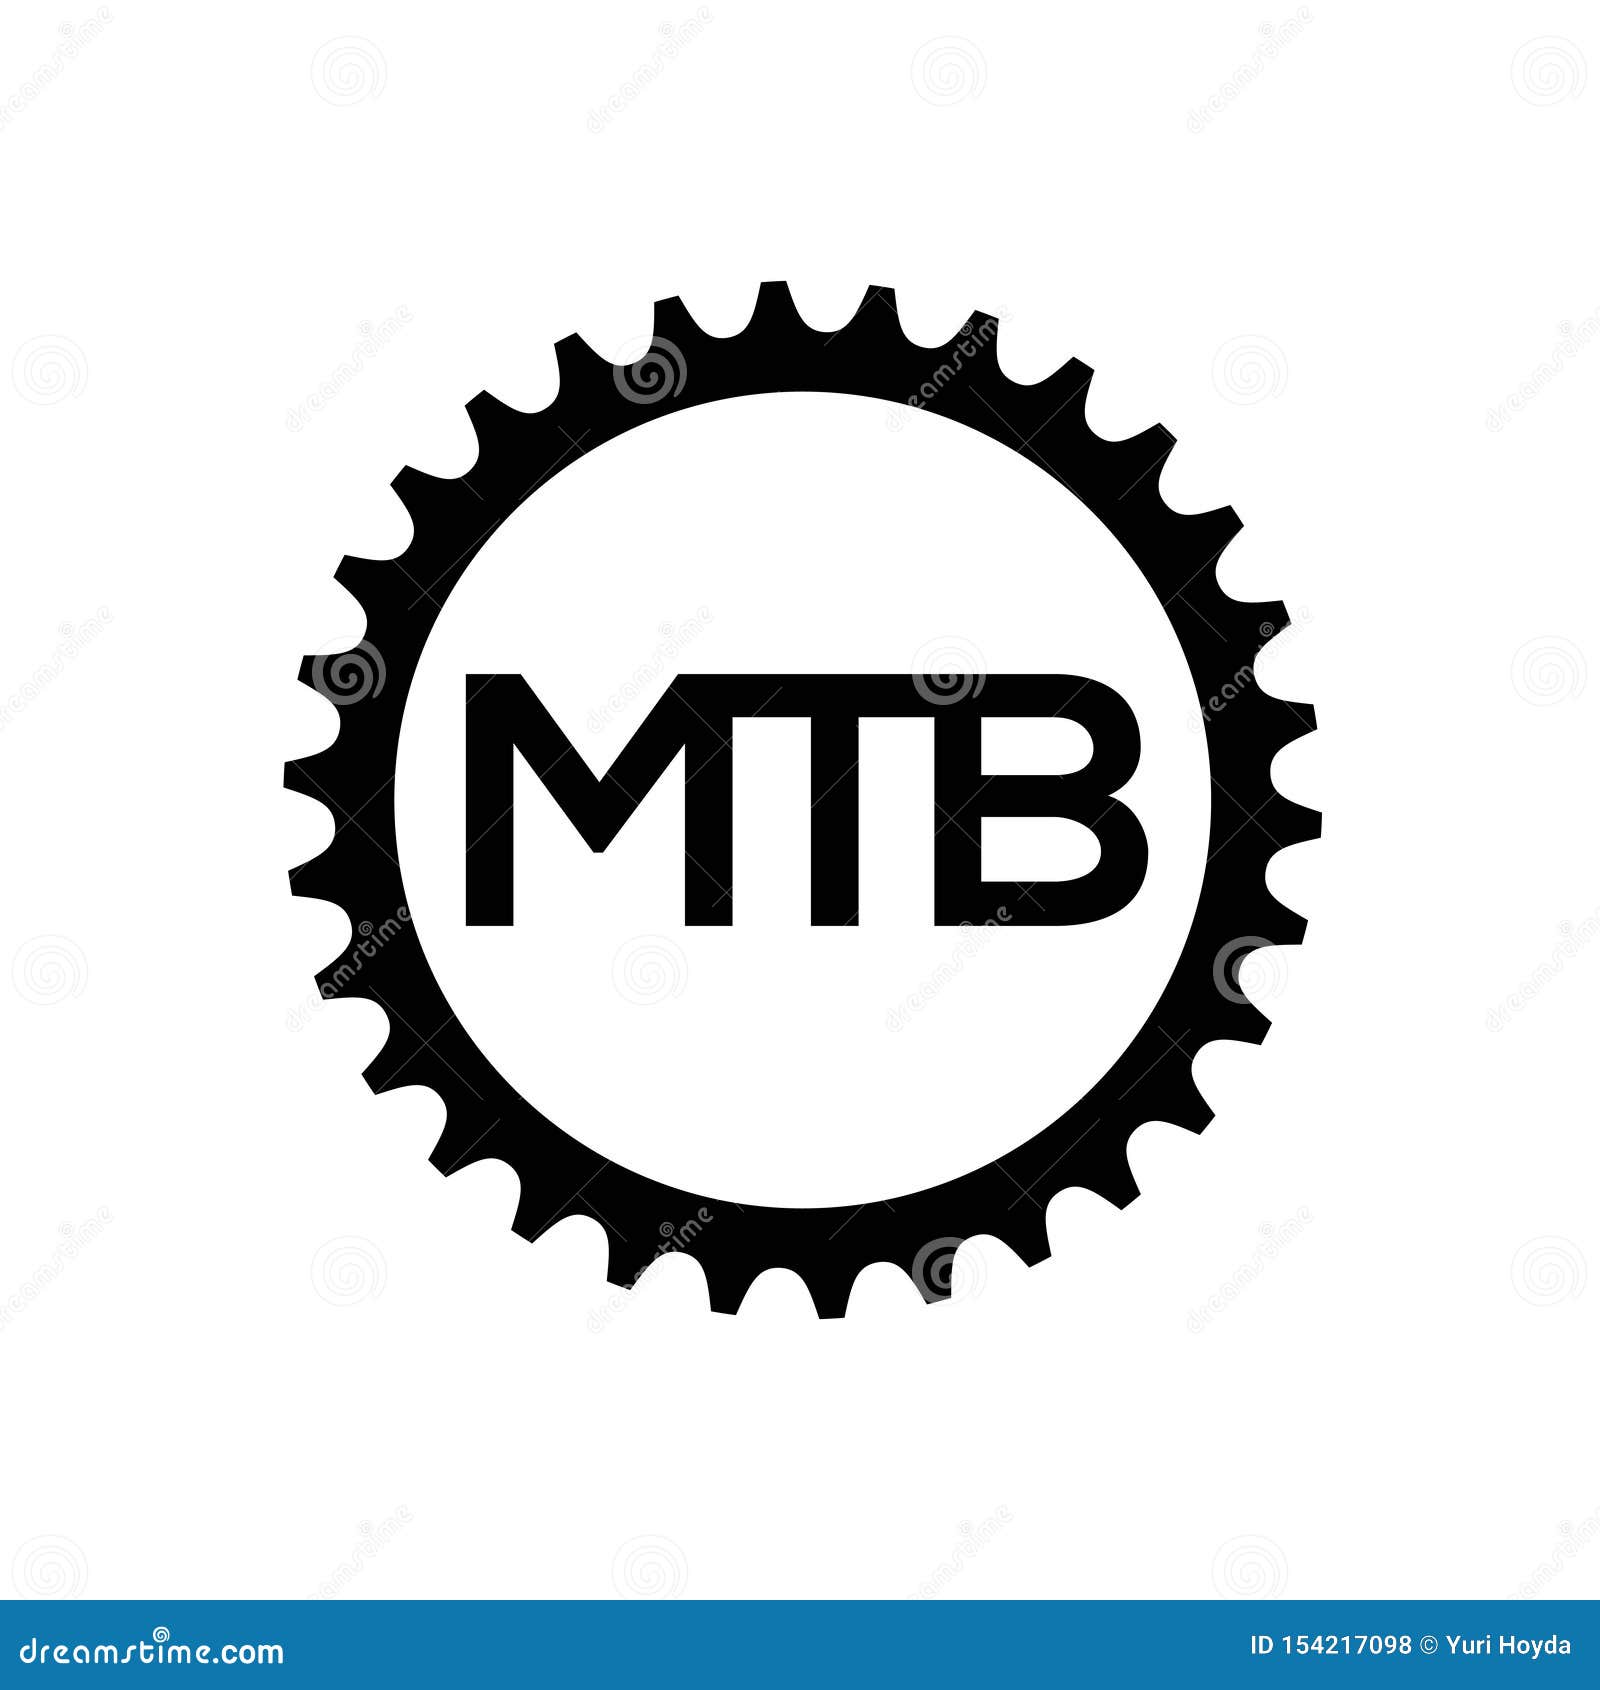 mtb bike gear